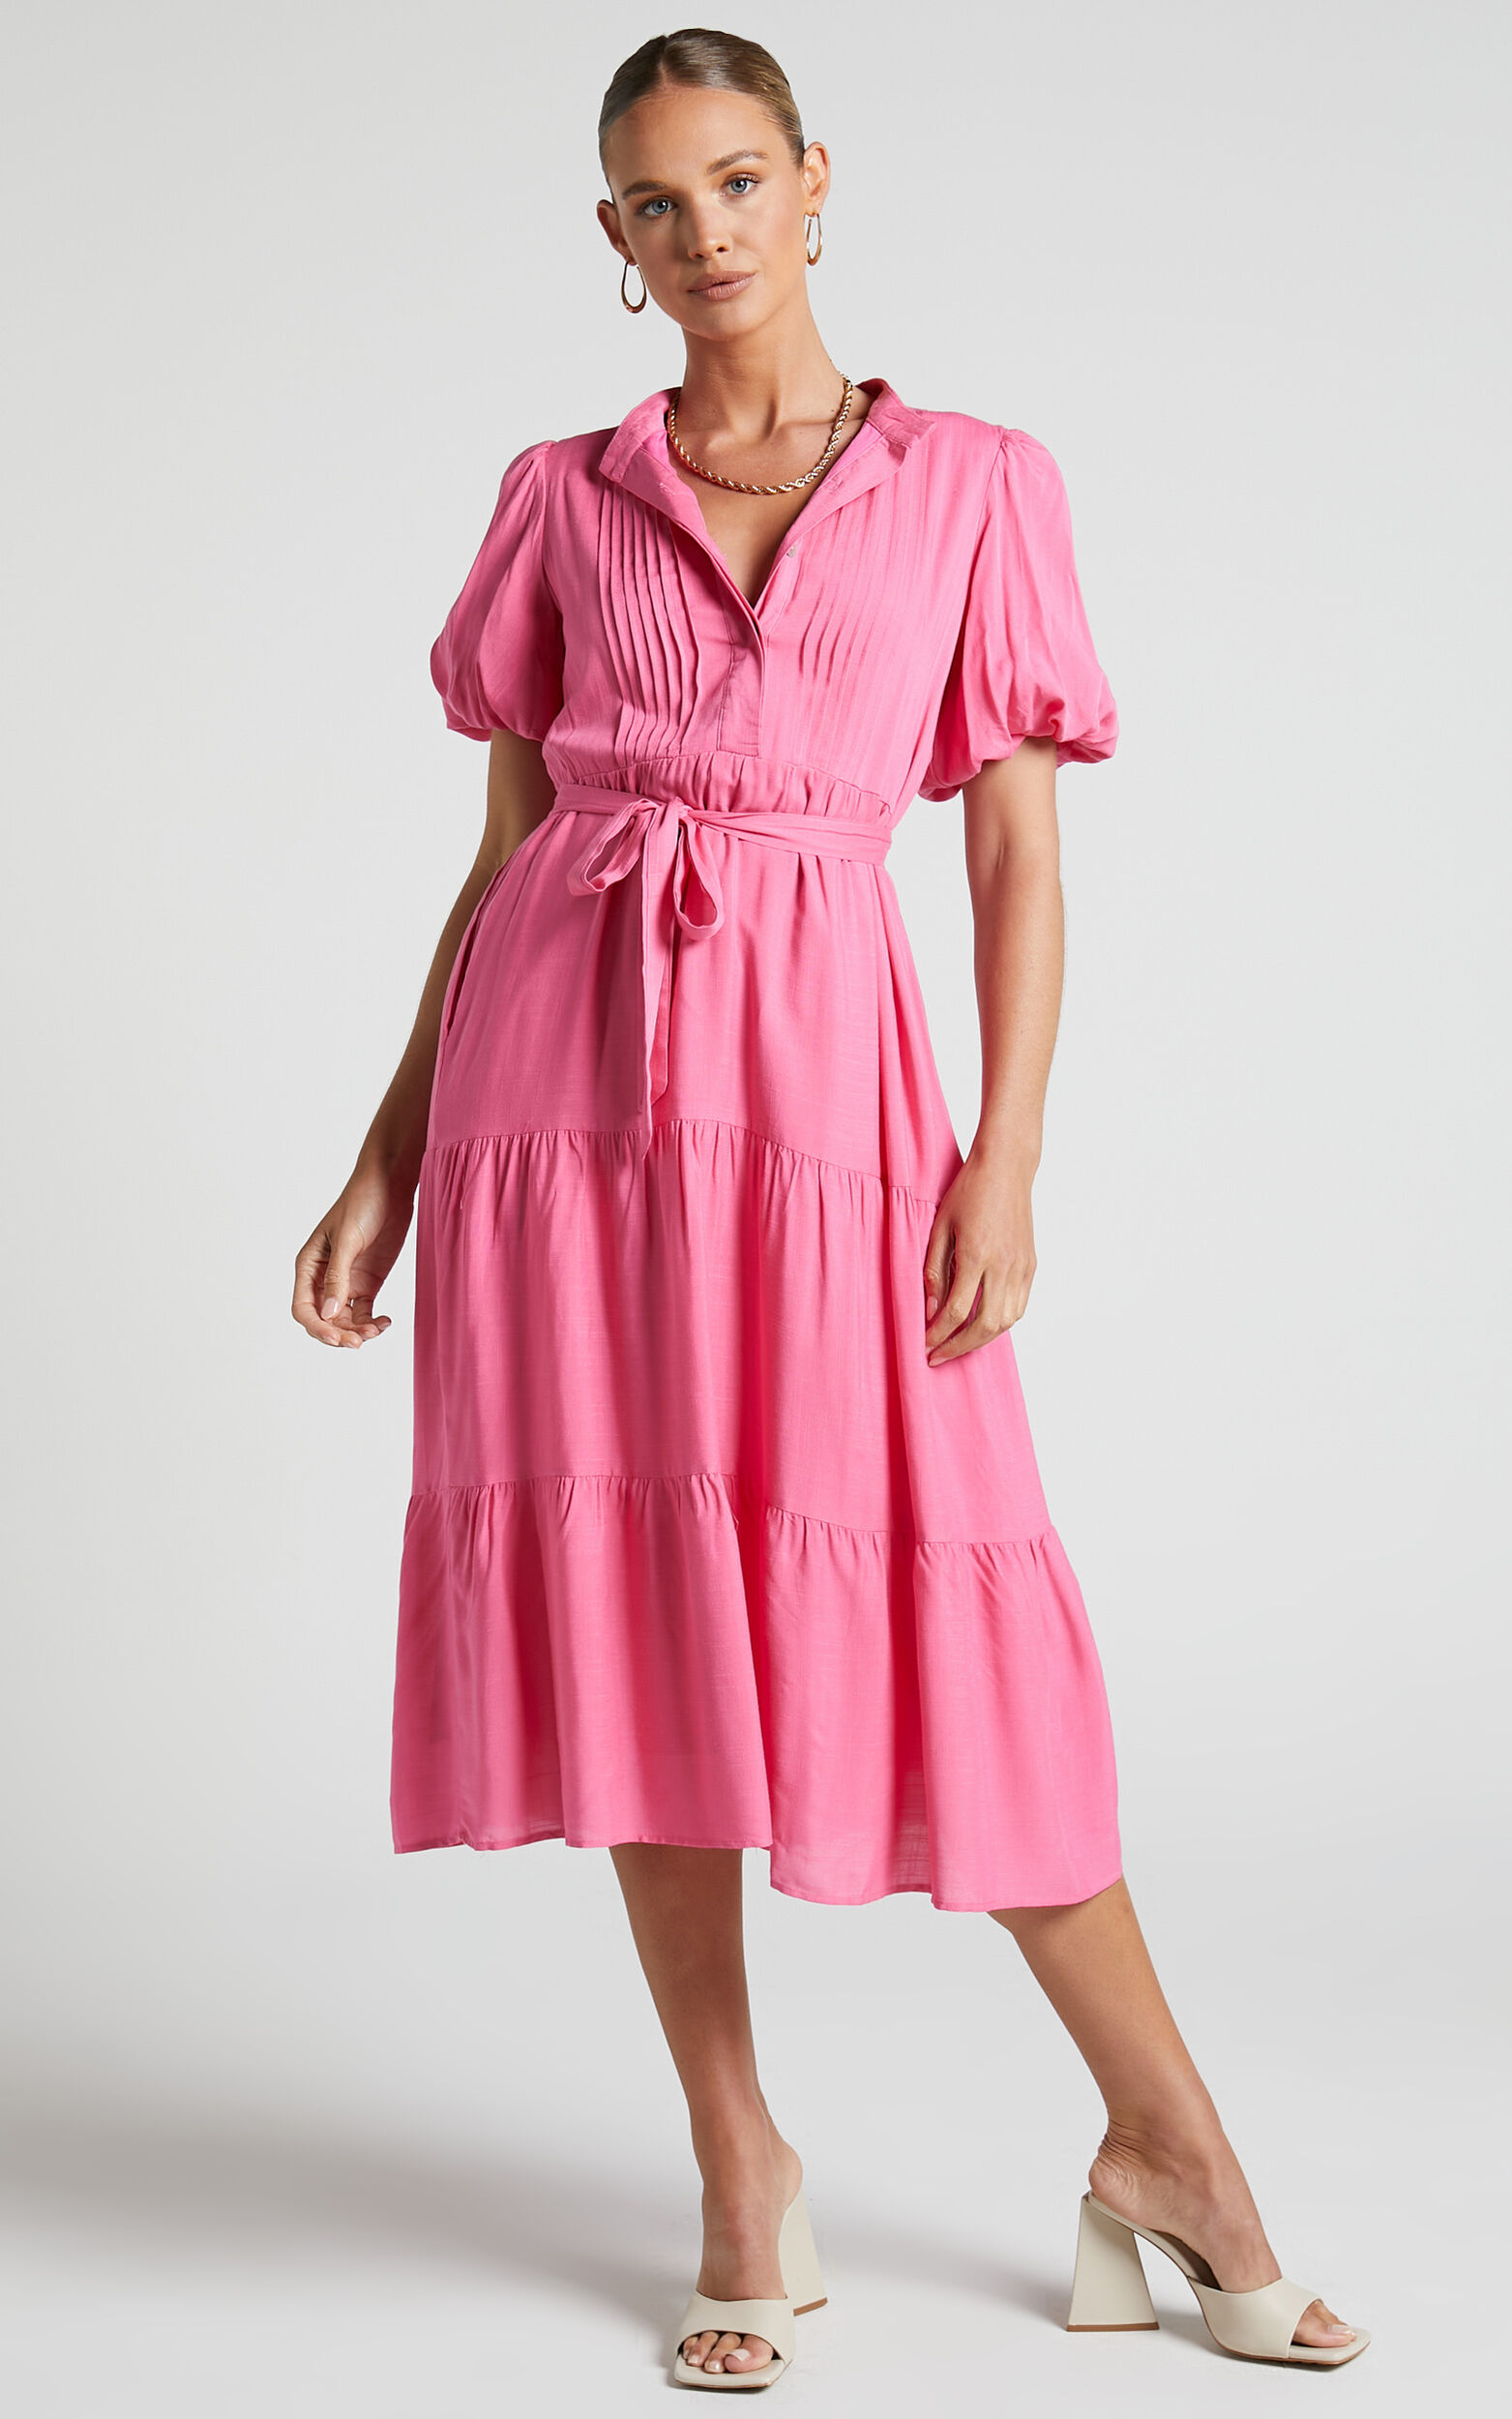 Lenessia Midi Dress - Puff Sleeve Collared Smock Dress in Hot Pink - 06, PNK1